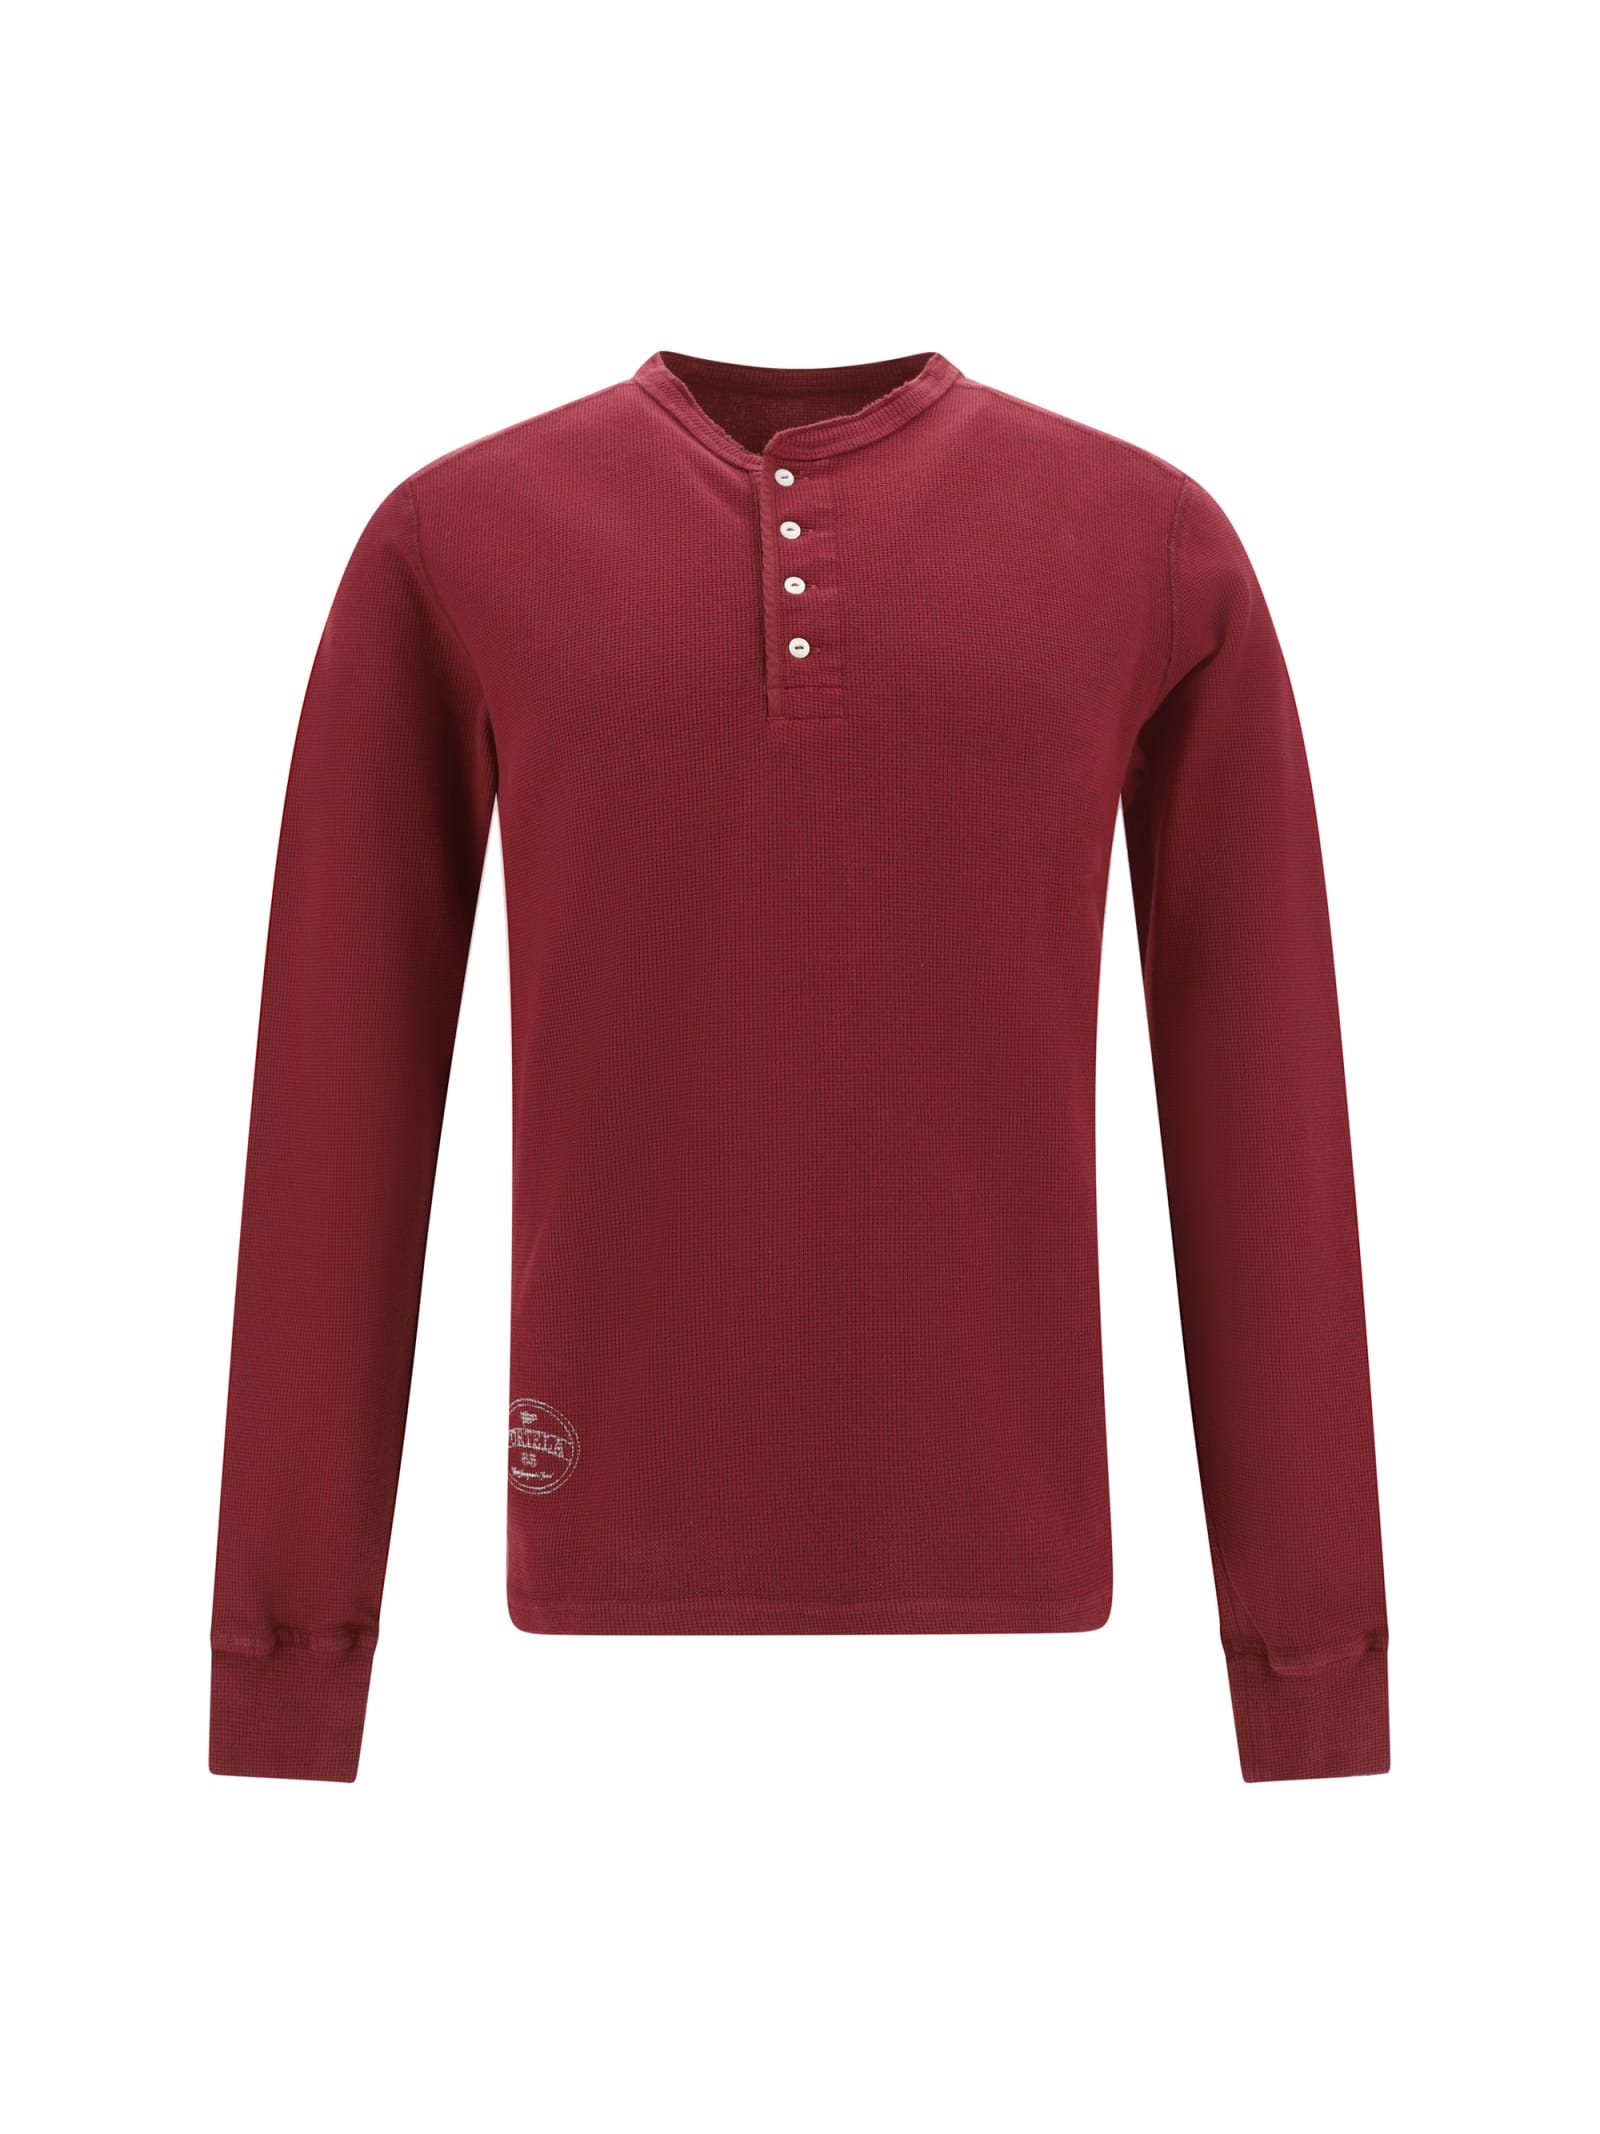 Shop Fortela Serafino Long Sleeve Jersey In Burgundy1